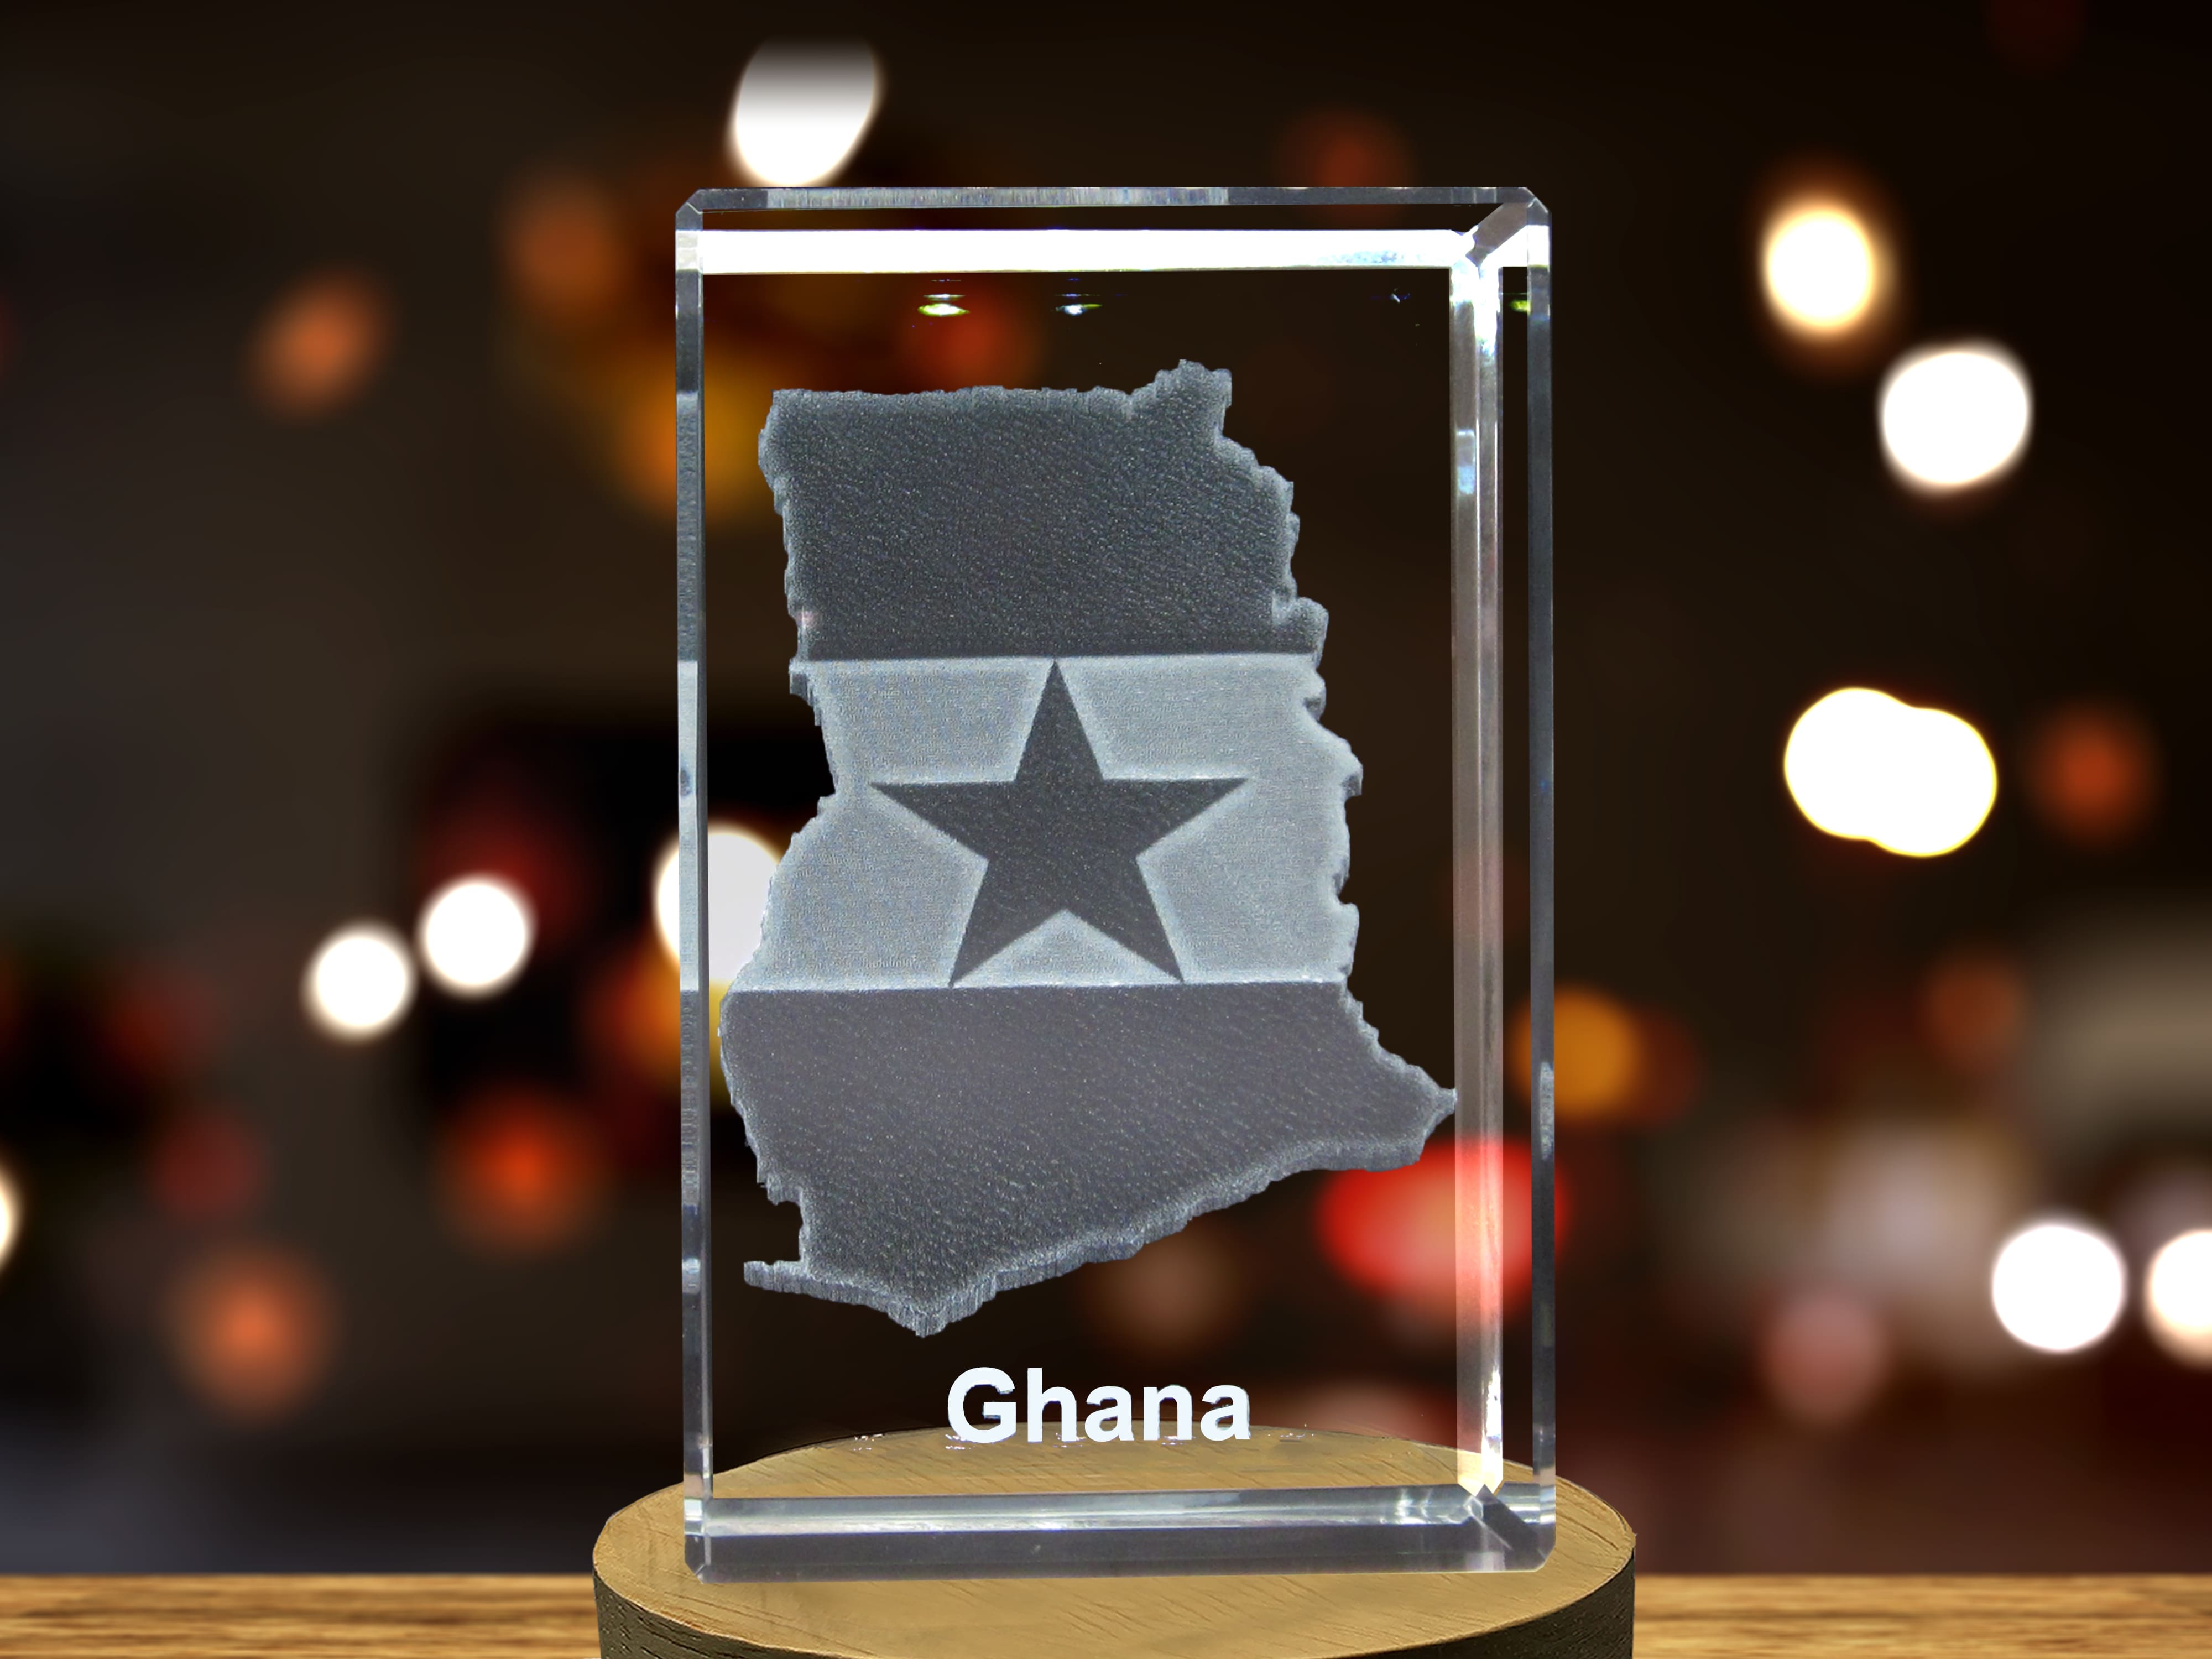 Ghana 3D Engraved Crystal 3D Engraved Crystal Keepsake/Gift/Decor/Collectible/Souvenir A&B Crystal Collection